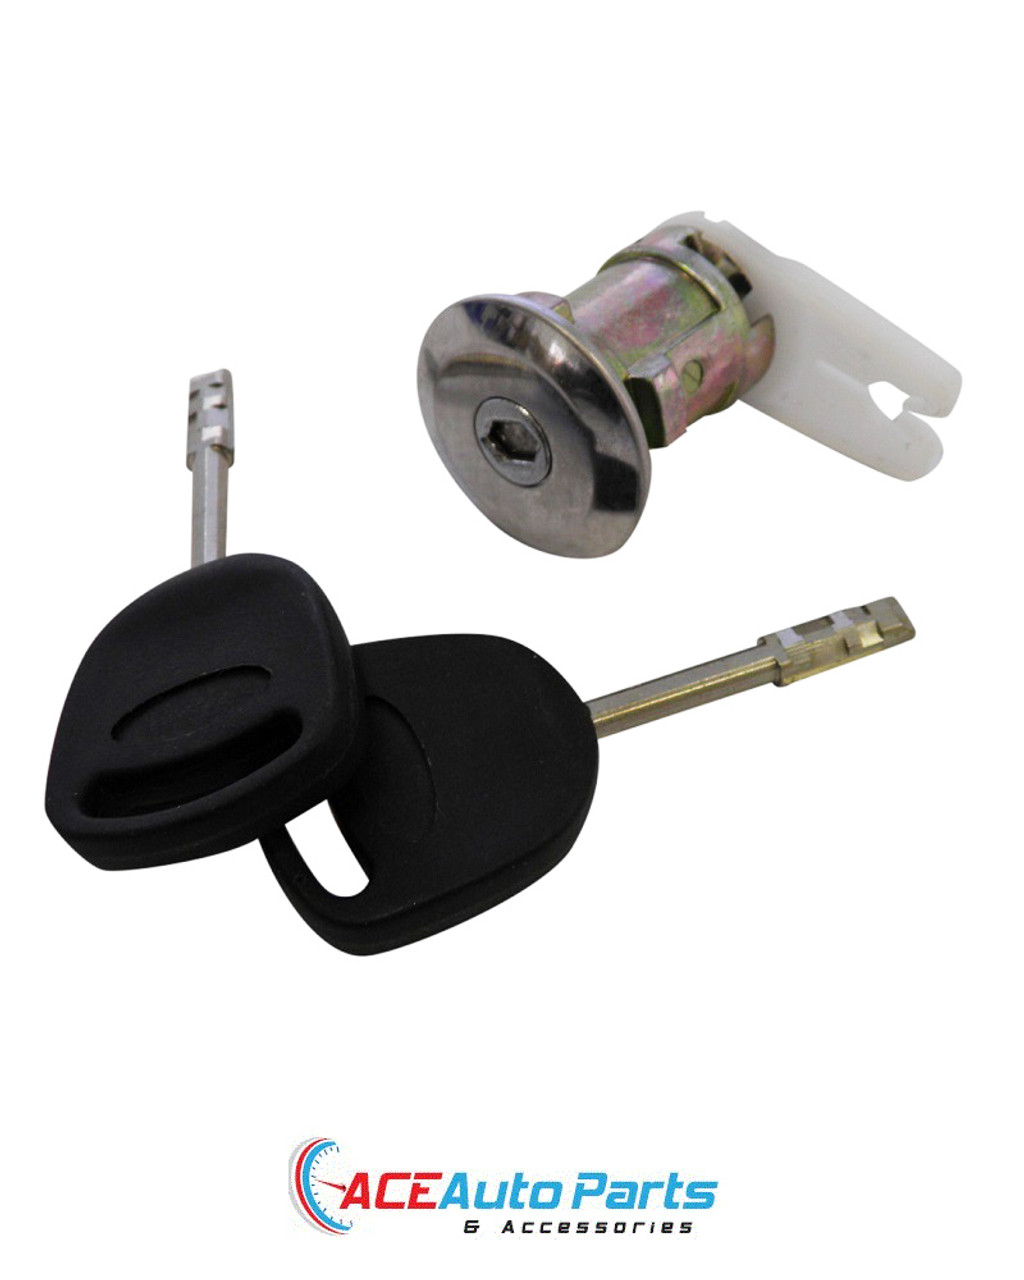 Boot lock with keys for Ford Falcon EA EB ED EF EL